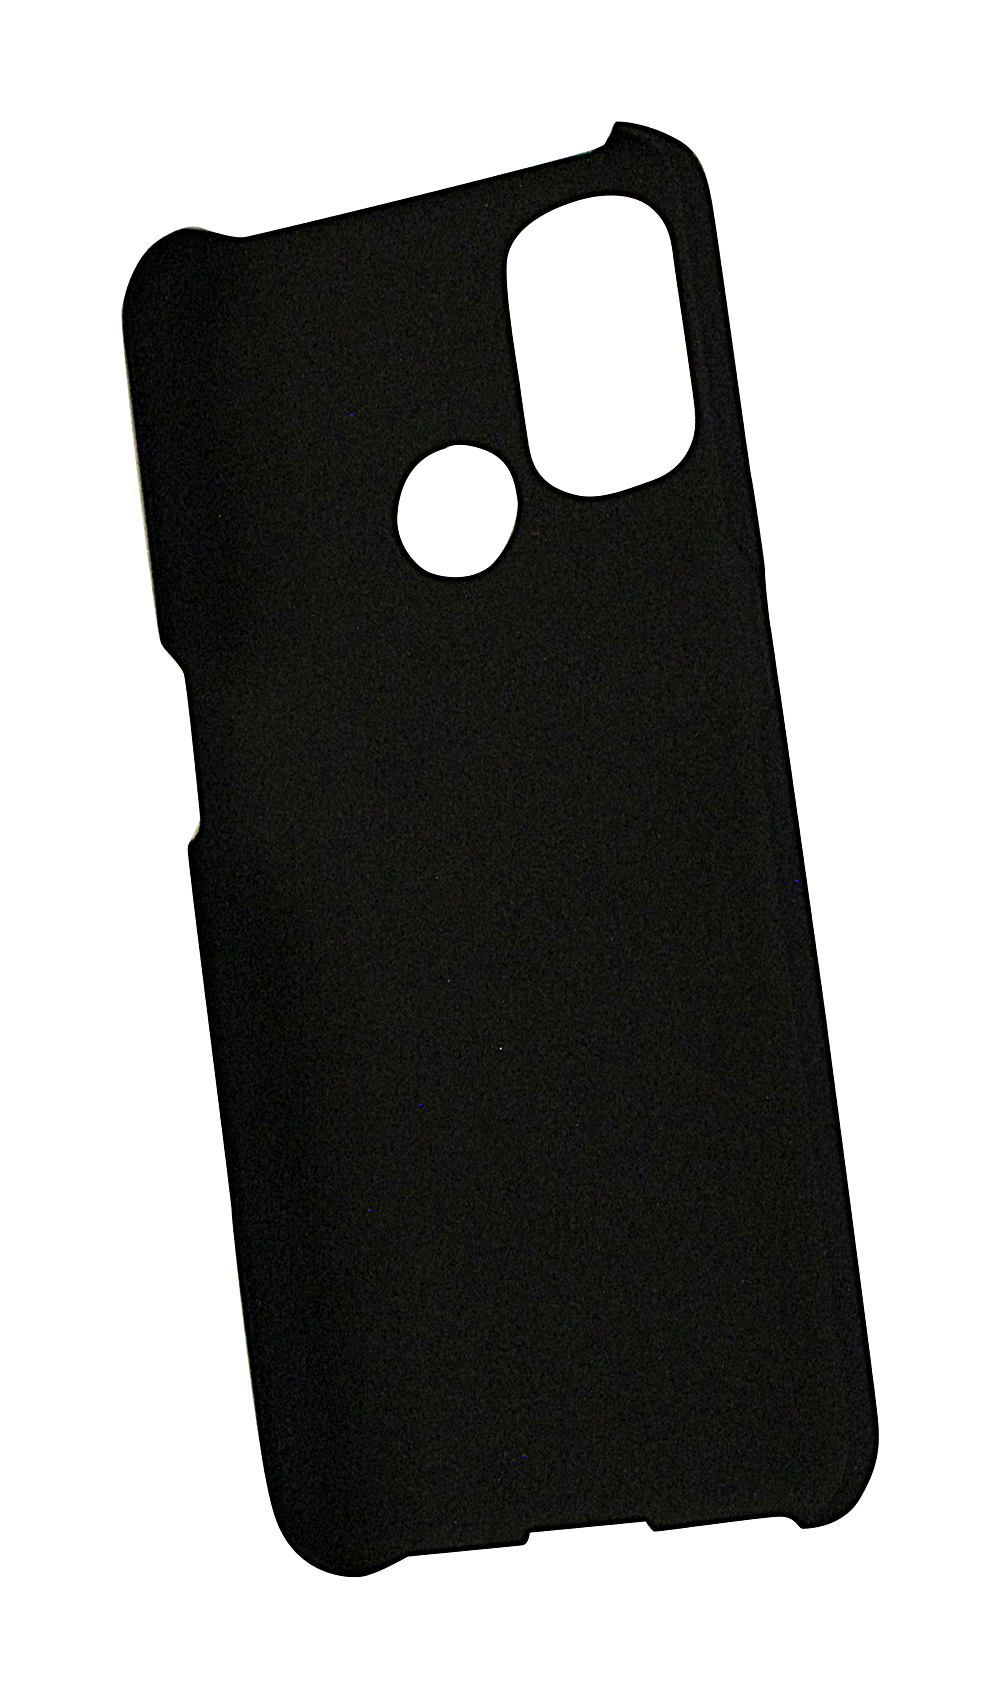 CoverInSkimblocker Magnet Fodral OnePlus Nord N100